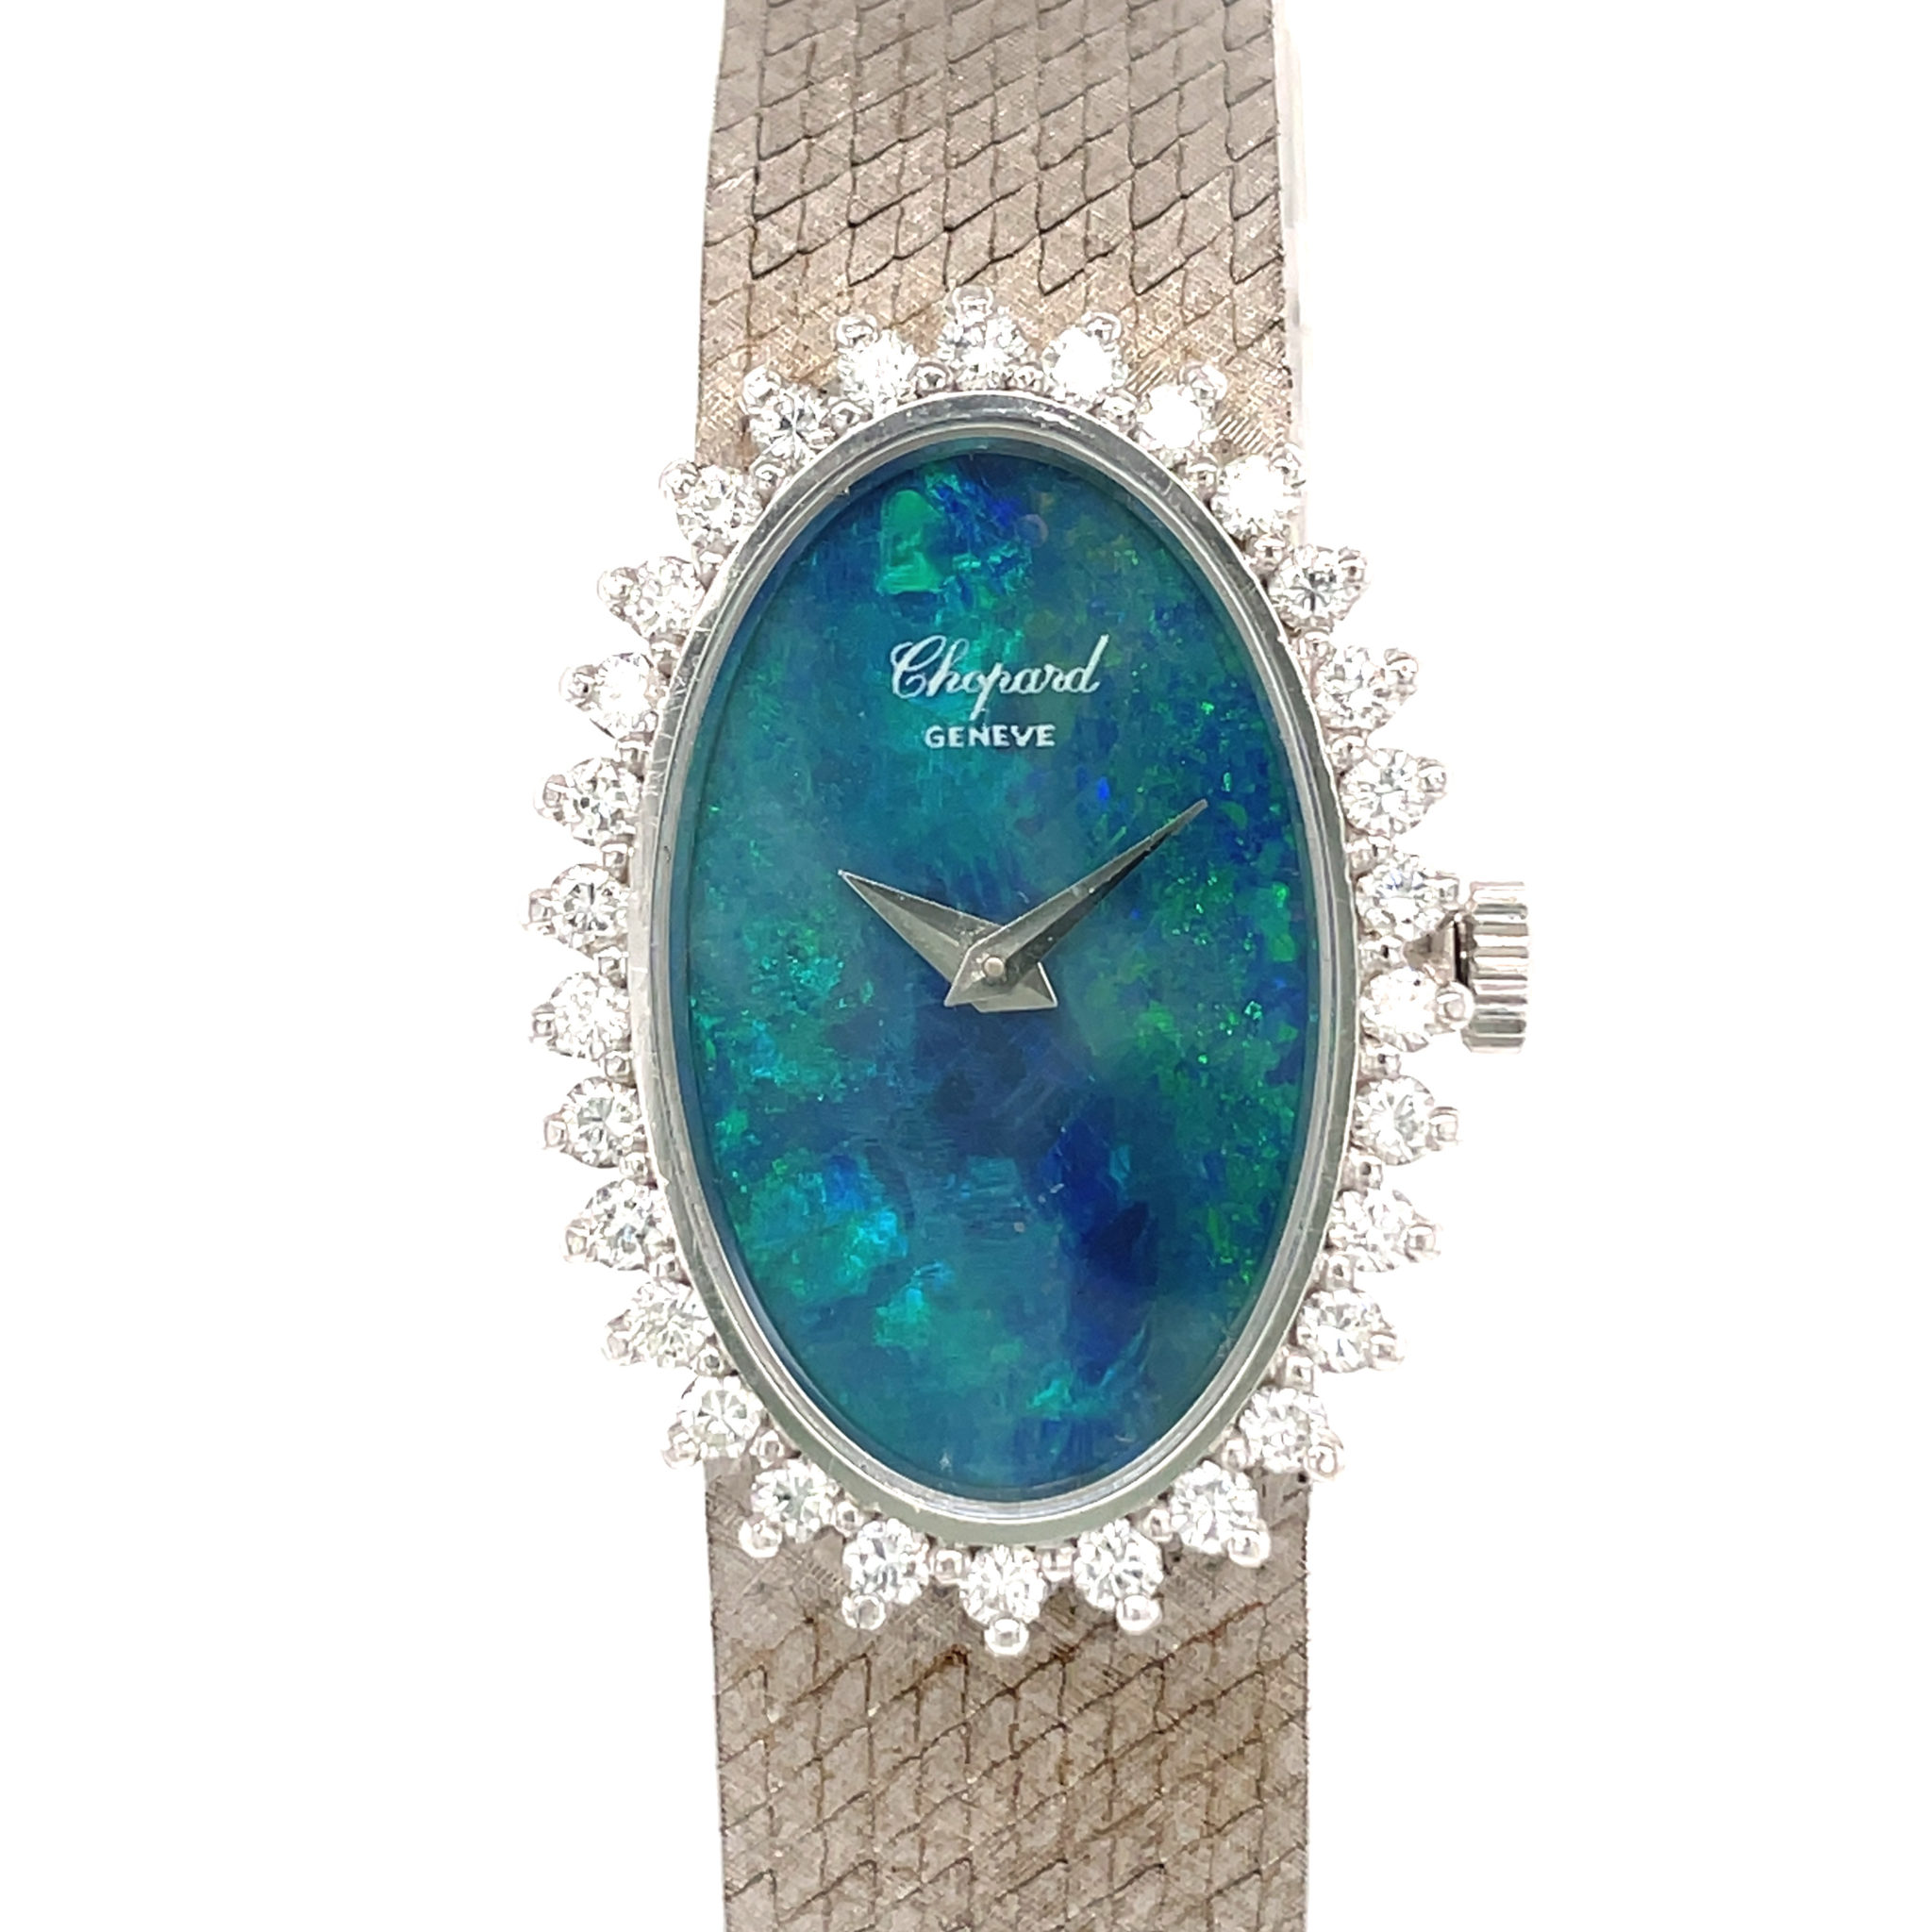 Chopard Ladys 18 K White Gold, Diamond, Opal Watch, Vintage, manual wind